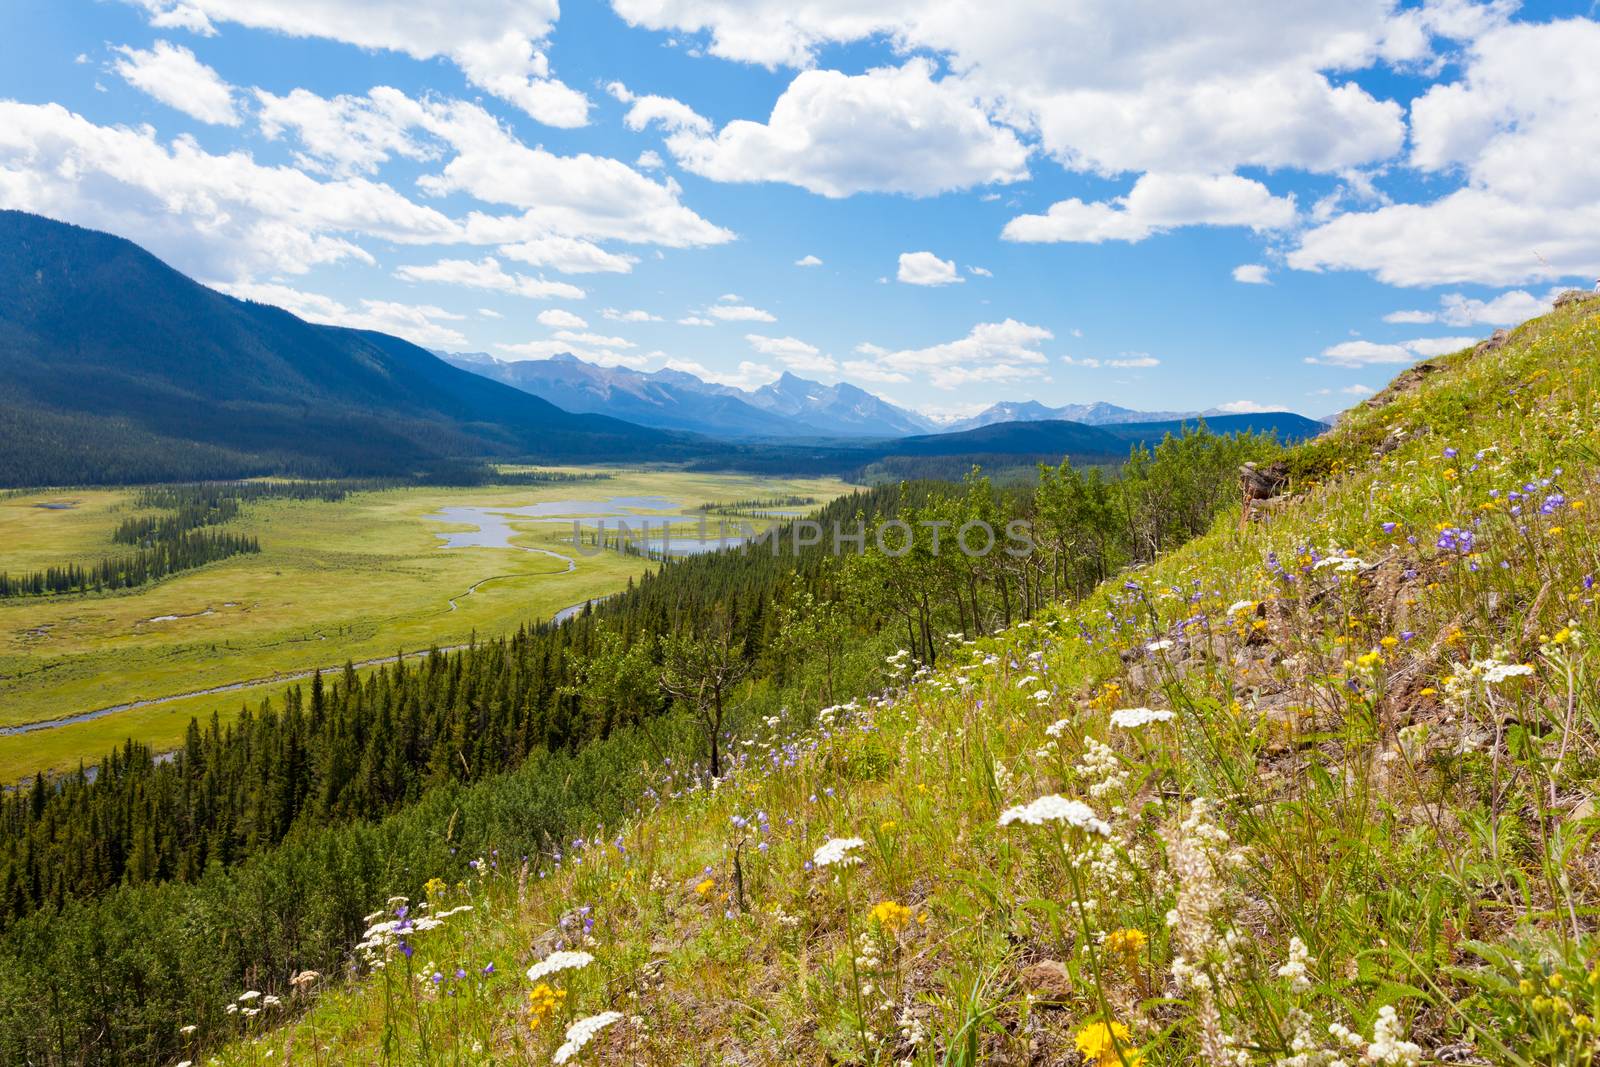 Mountain valley riparian wetland in Willmore Wilderness Park, Alberta, Canada, nature habitat landscape